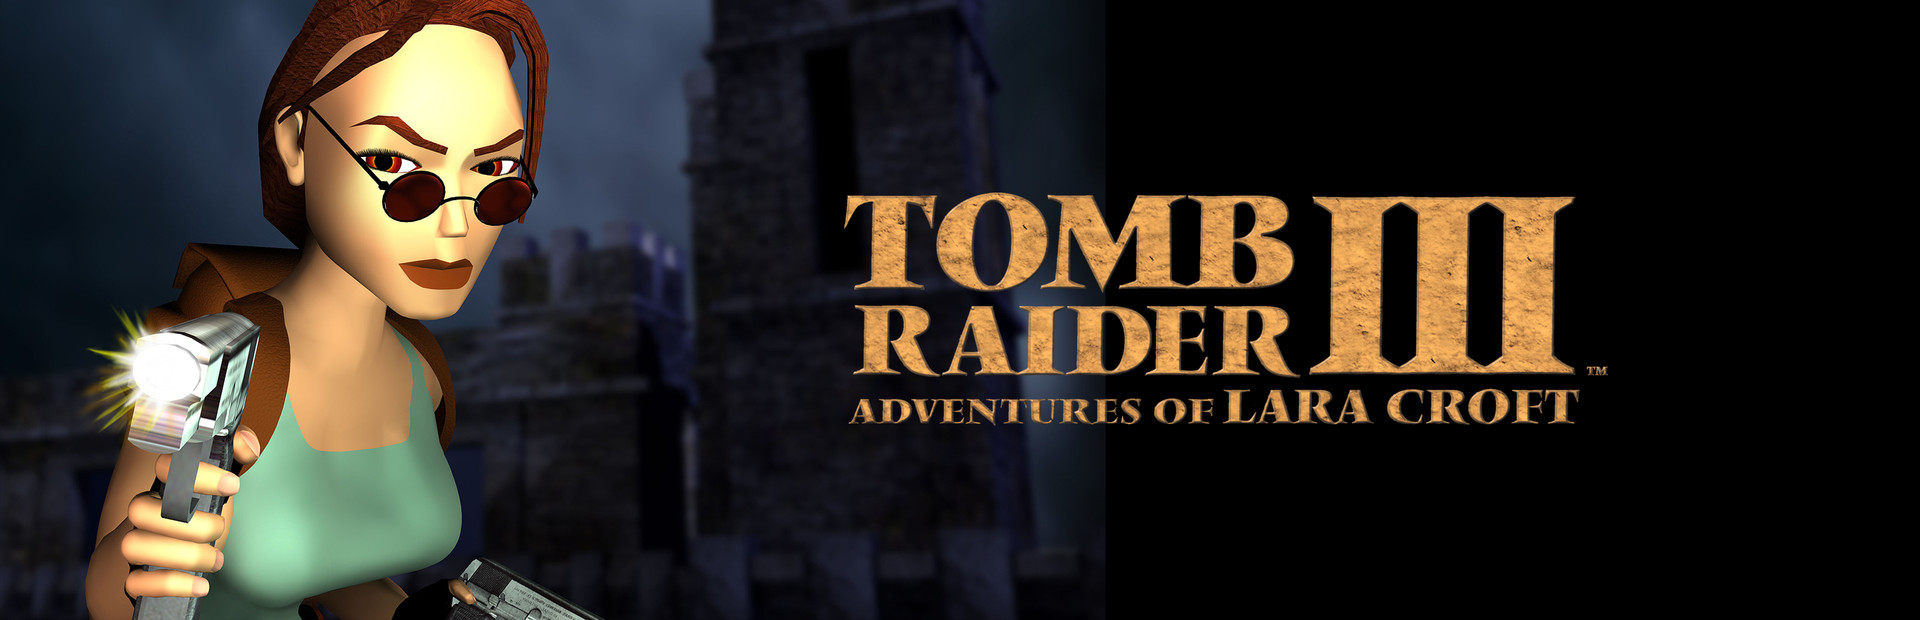 Tomb Raider III (1998) cover image